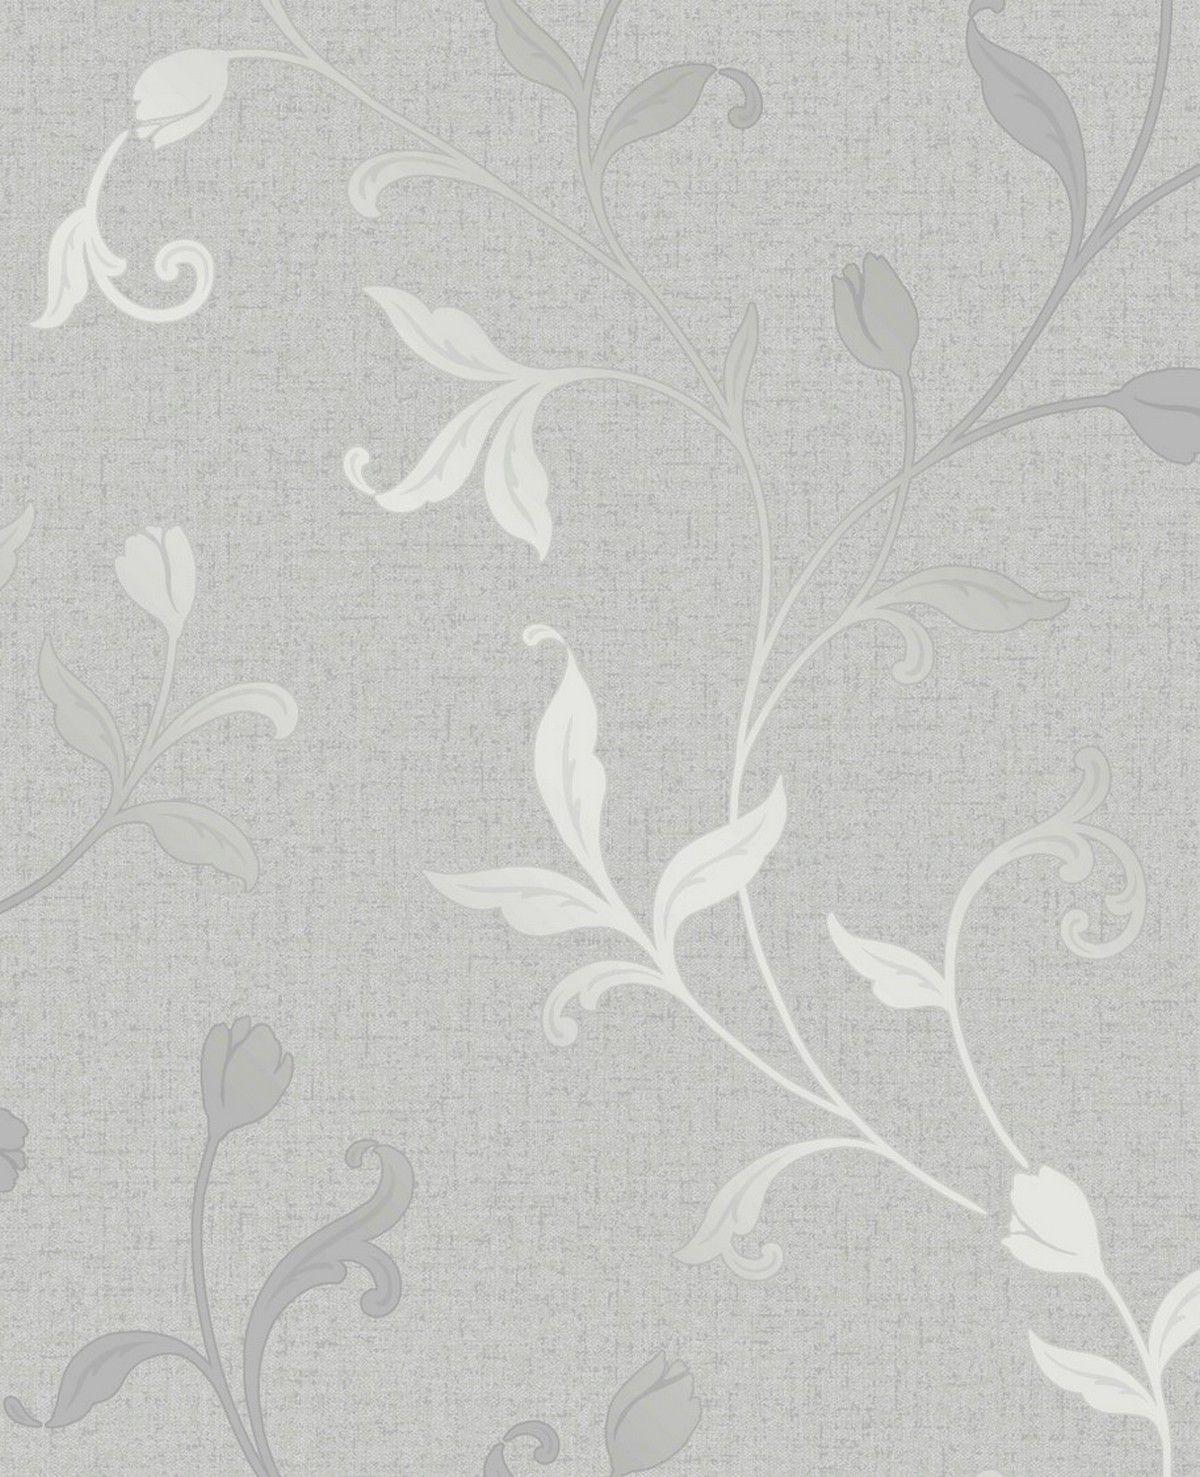 Download Silver Design Wallpaper, HD Backgrounds Download - itl.cat